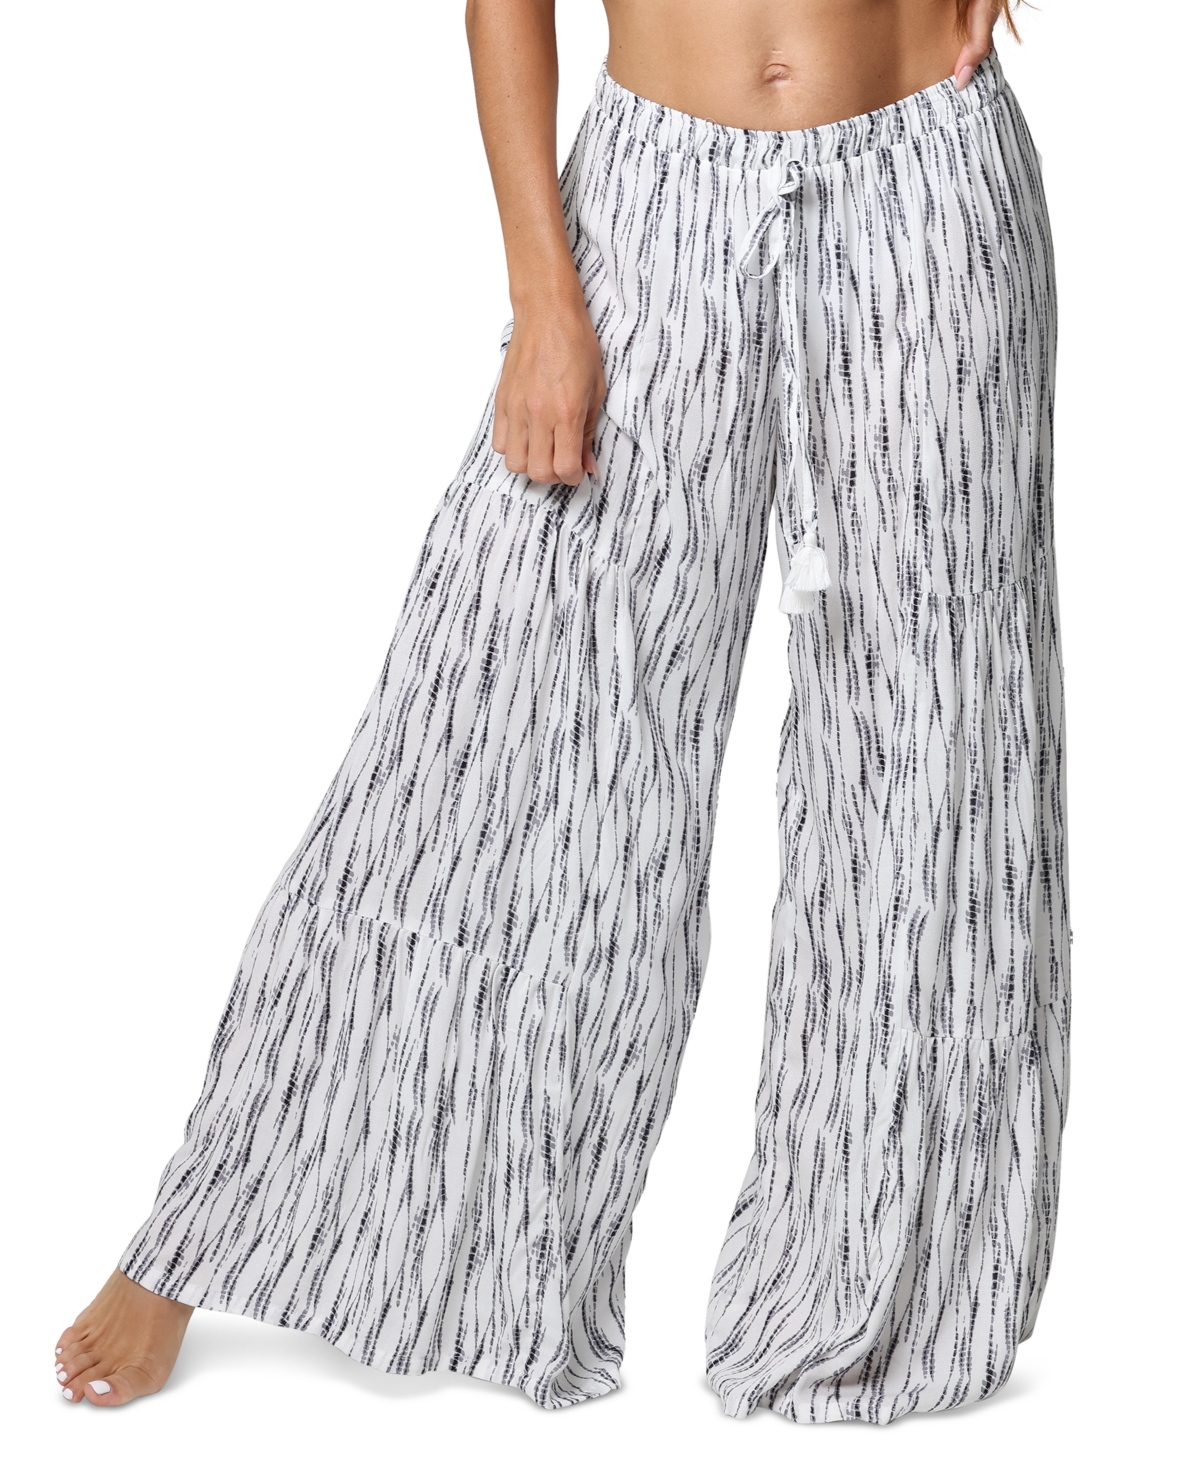 Women's Printed Tiered Wide-Leg Drawstring Pants - White/gray